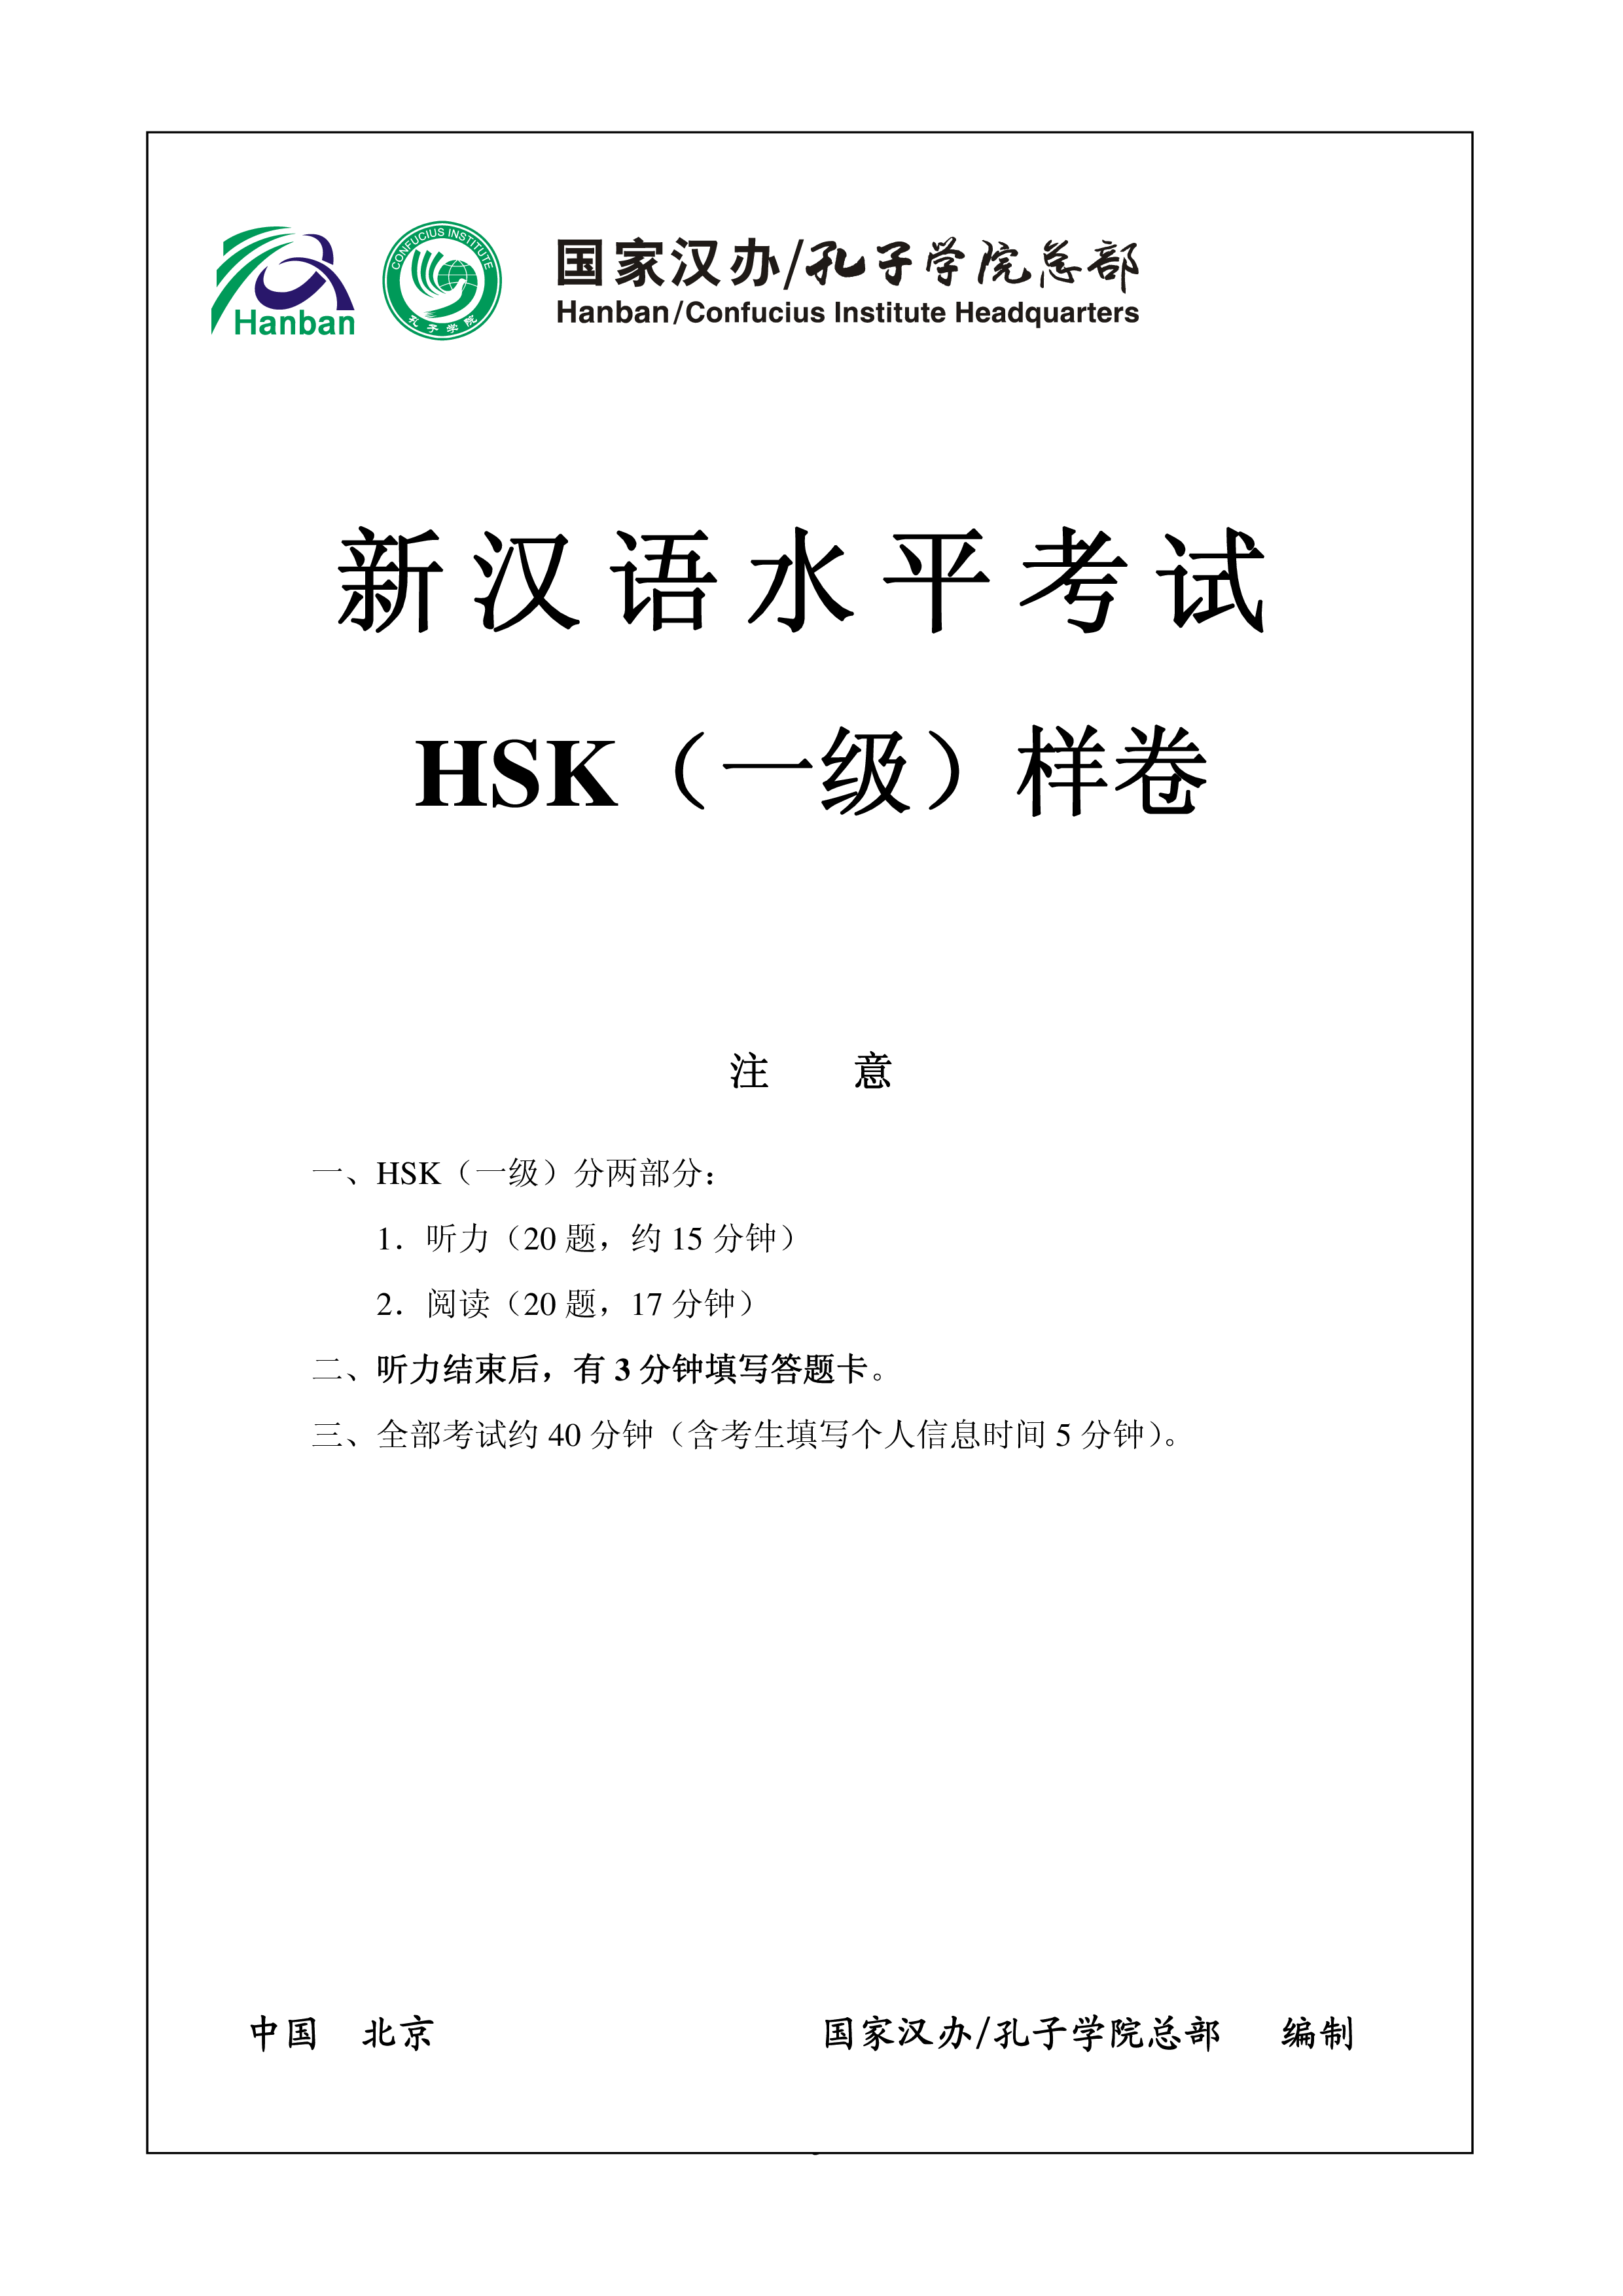 hsk1 chinese exam including answers # hsk1 1-1 Hauptschablonenbild